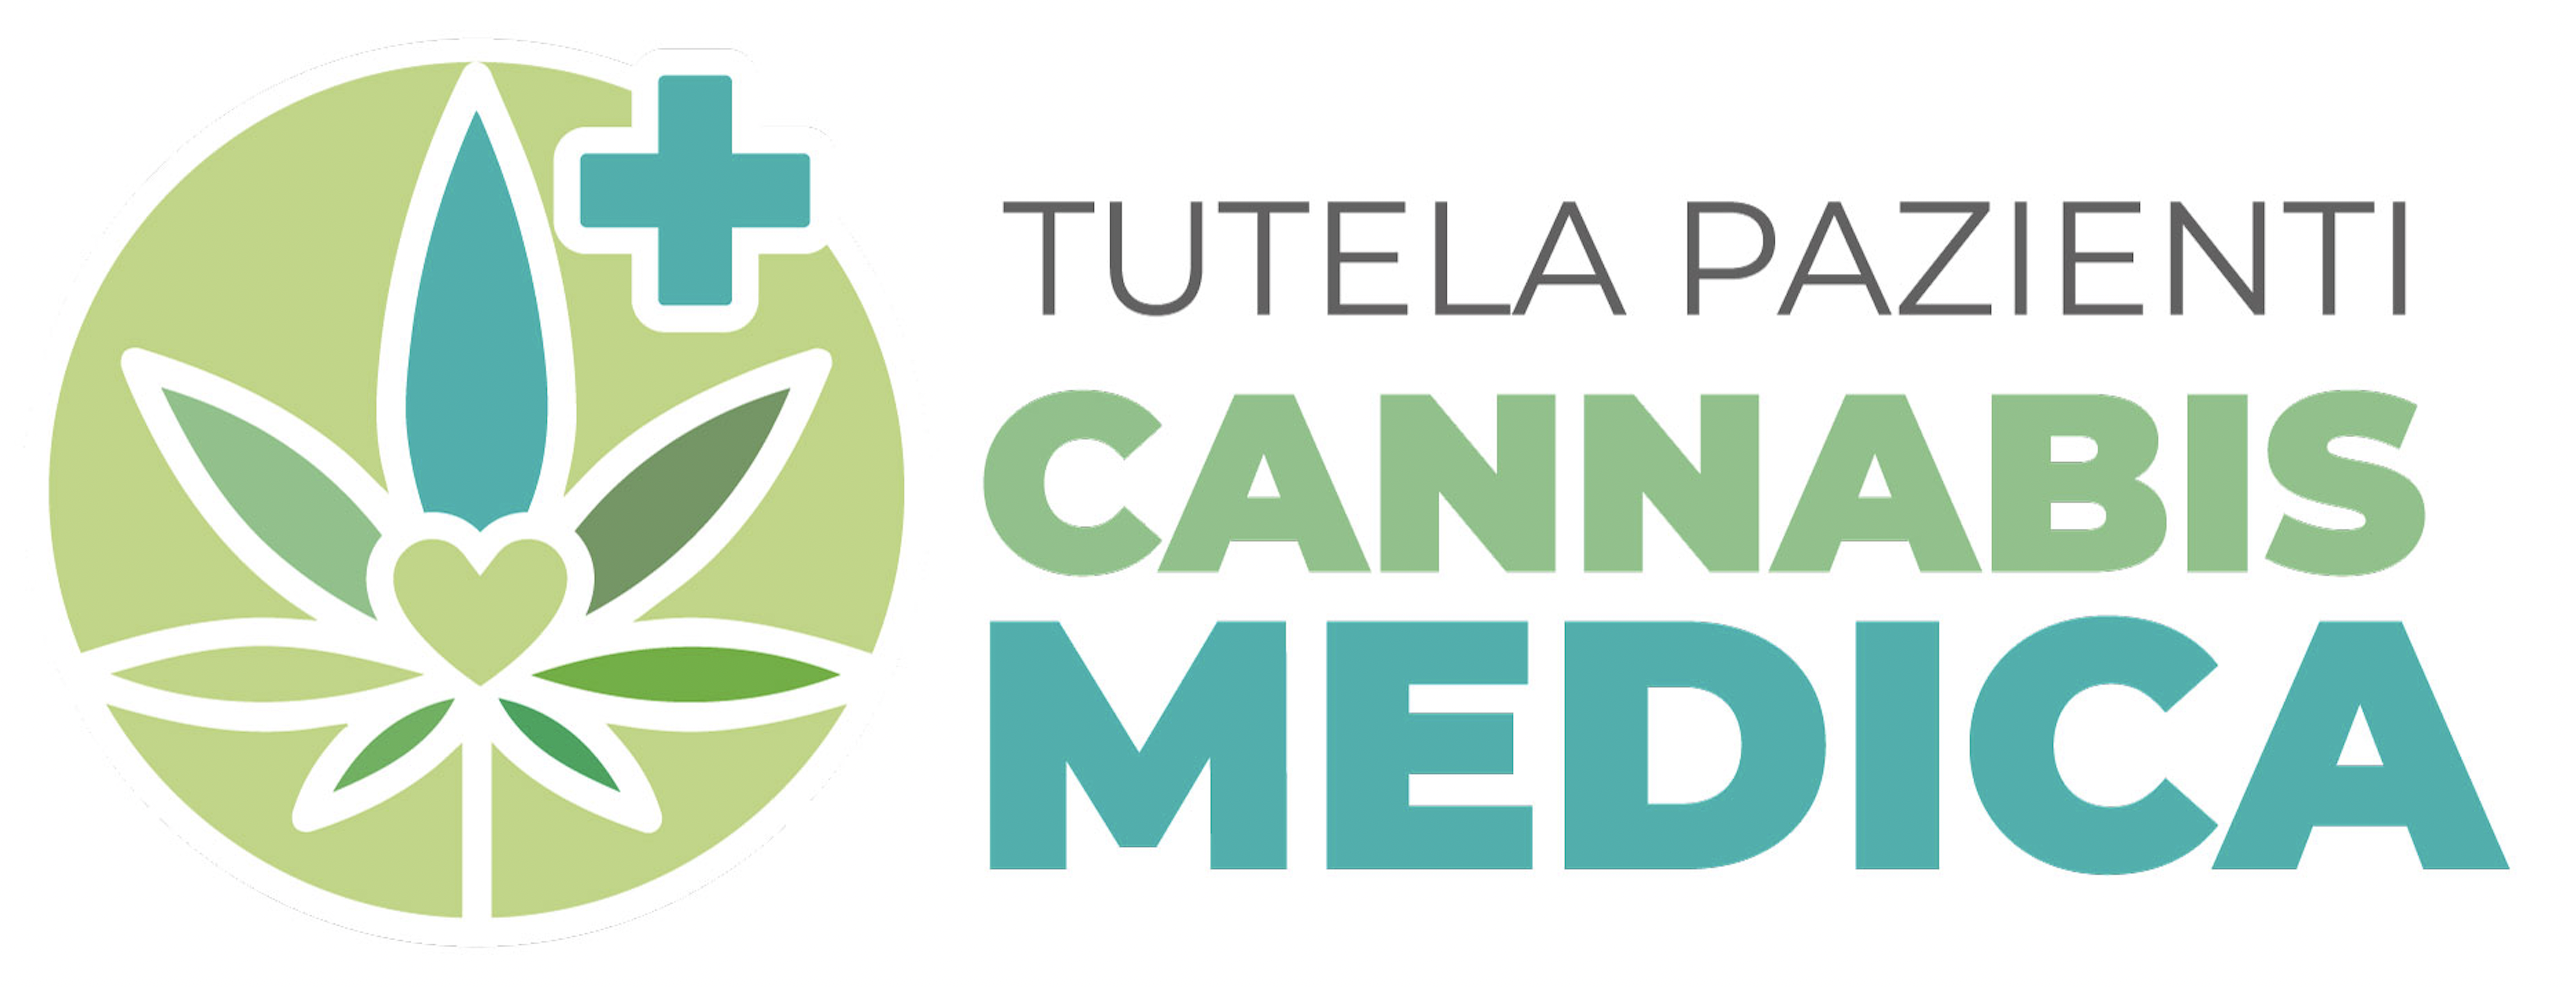 Tutela Pazienti Cannabis Medica